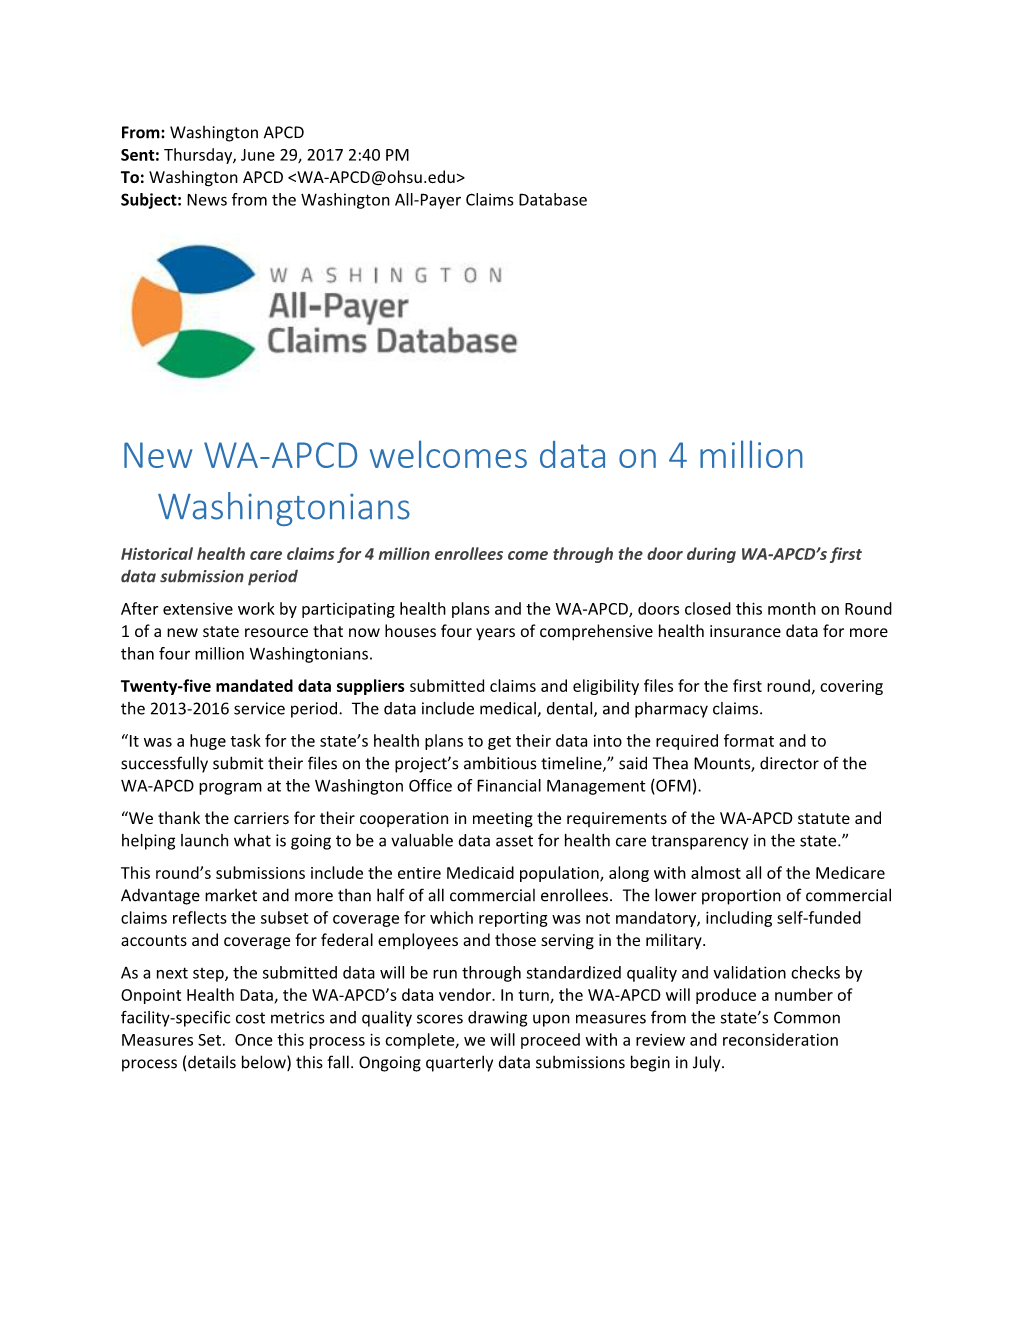 New WA-APCD Welcomes Data on 4 Million Washingtonians